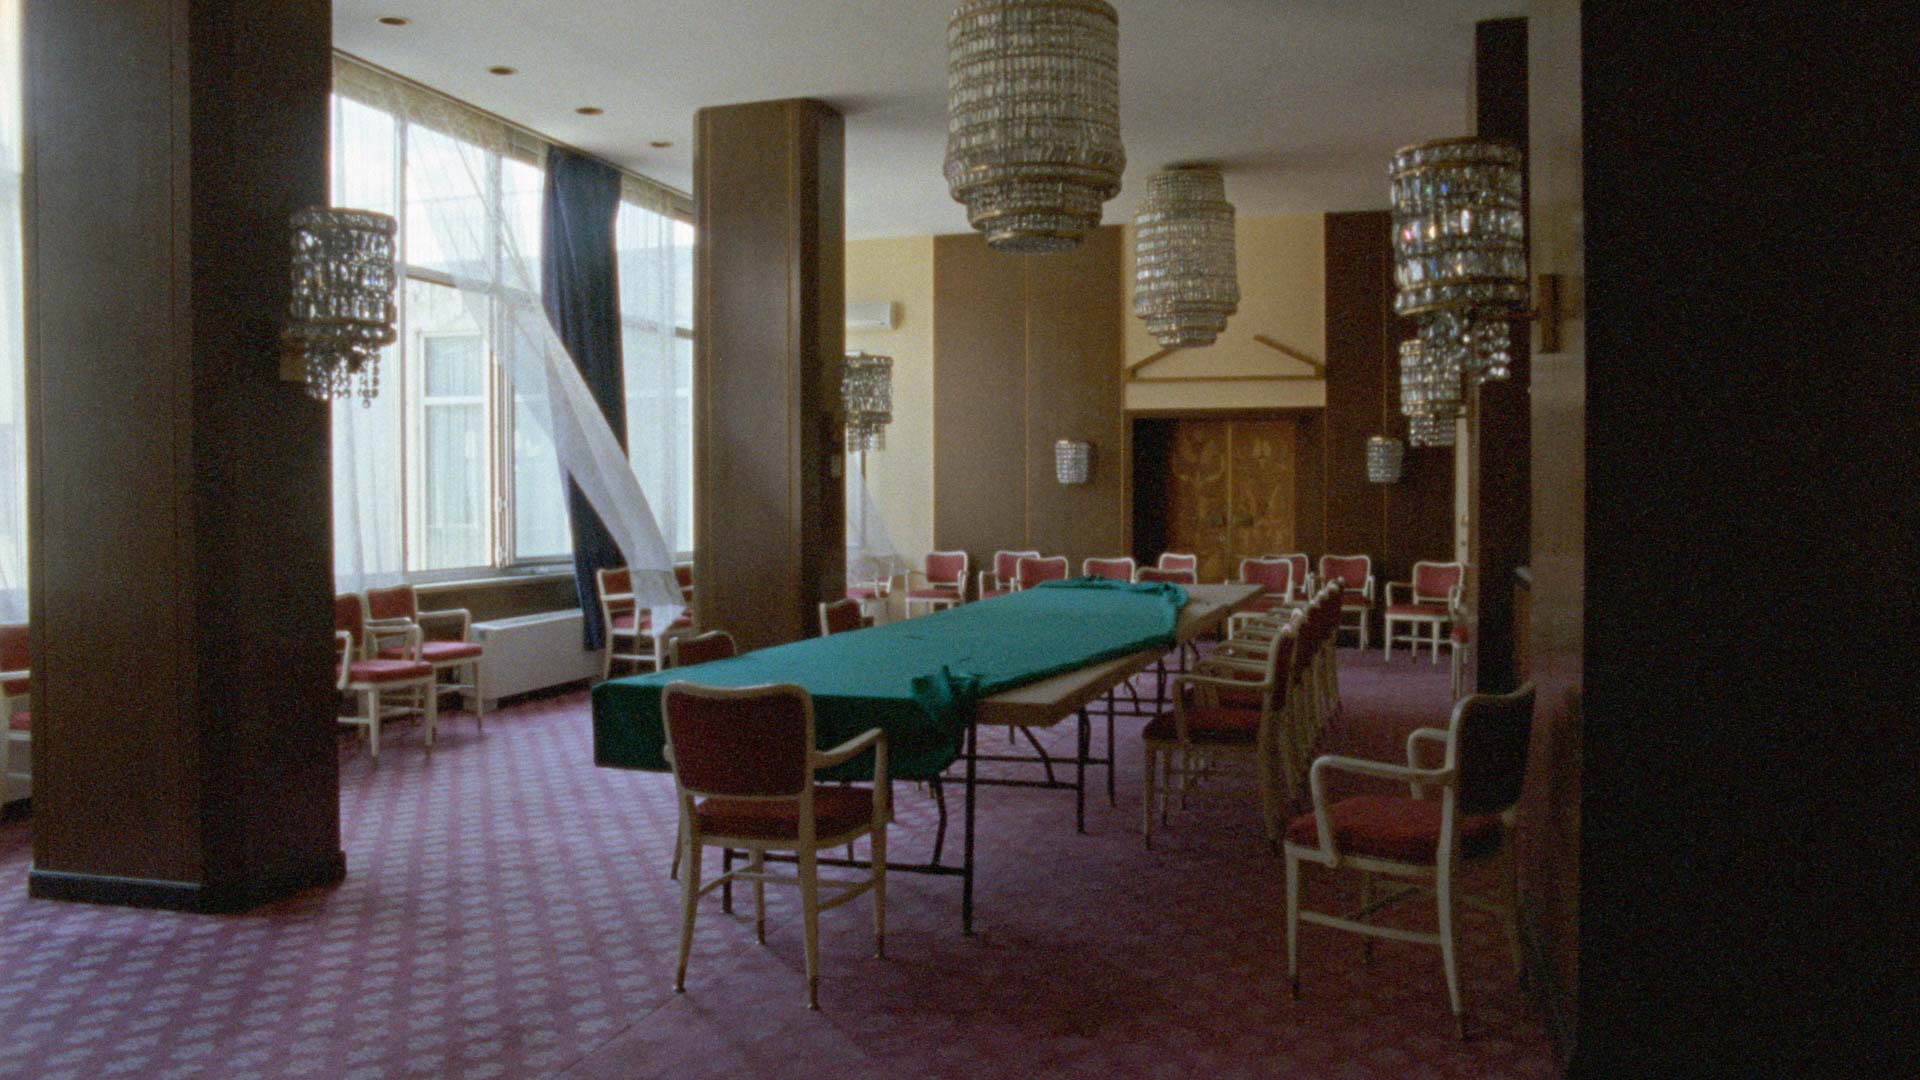 Hotel Jugoslavija (2017) Screenshot 4 